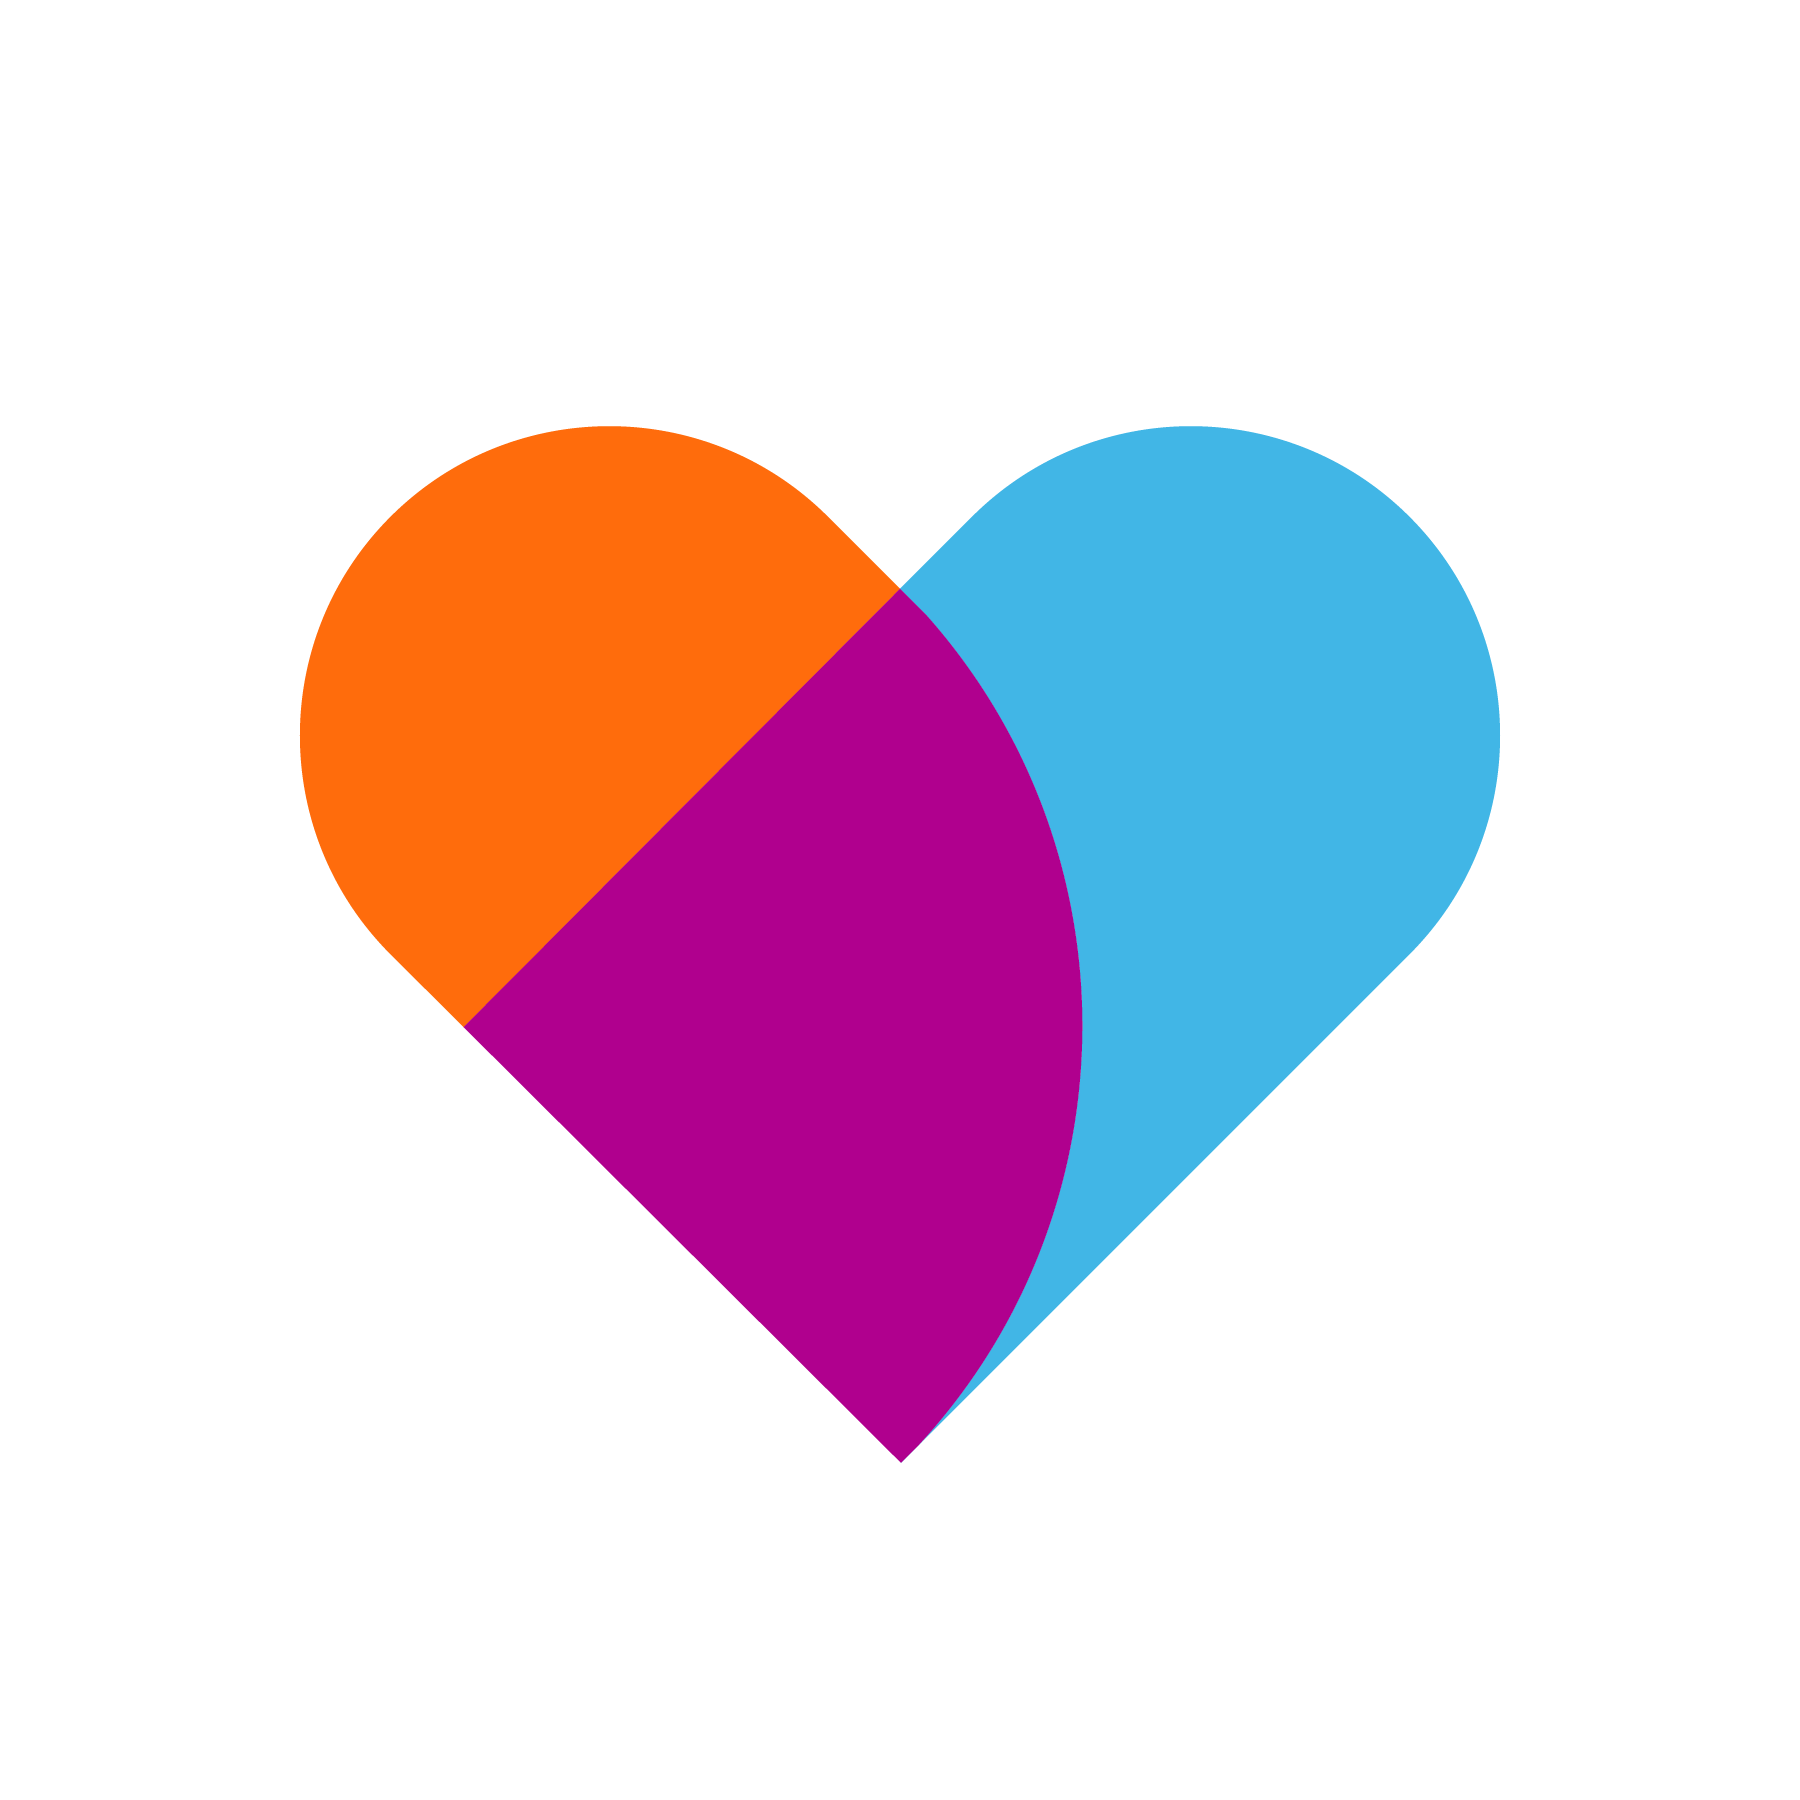 Foundation cardiology fund icon